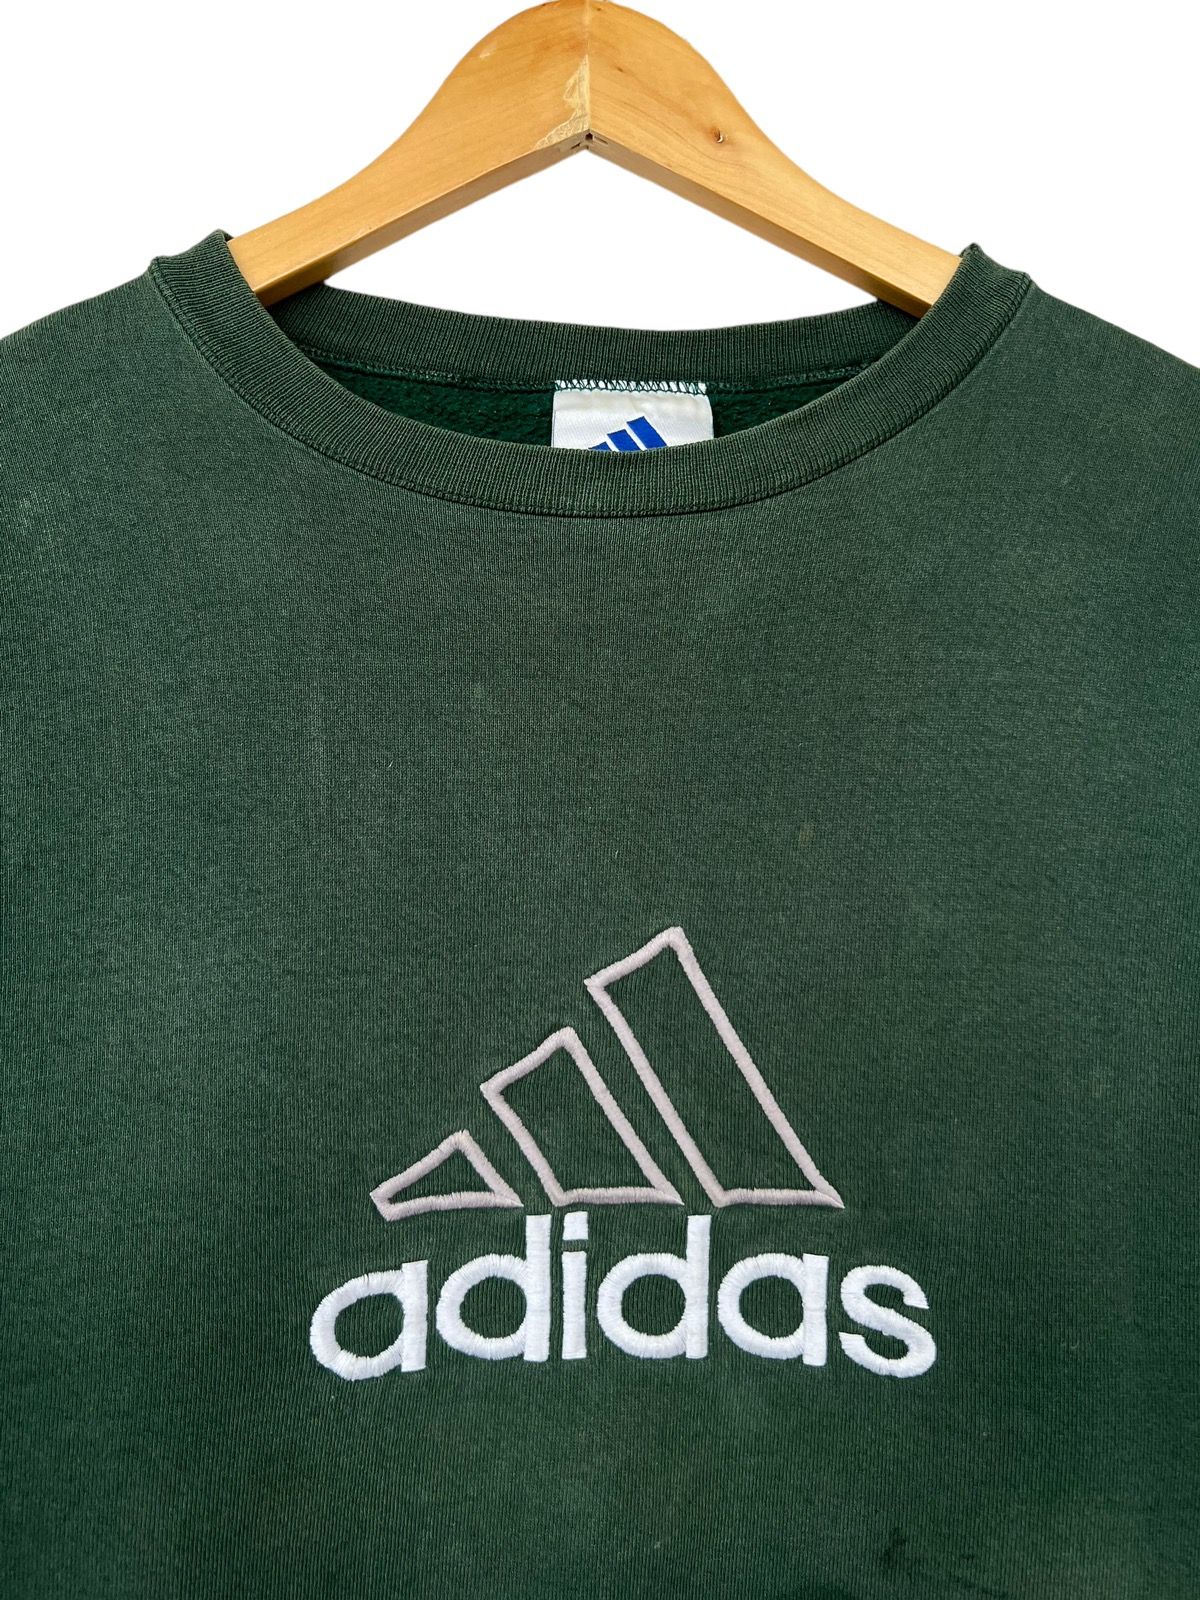 Vintage 90s Adidas Trefoil Biglogo Green Baggy Sweatshirt - 4